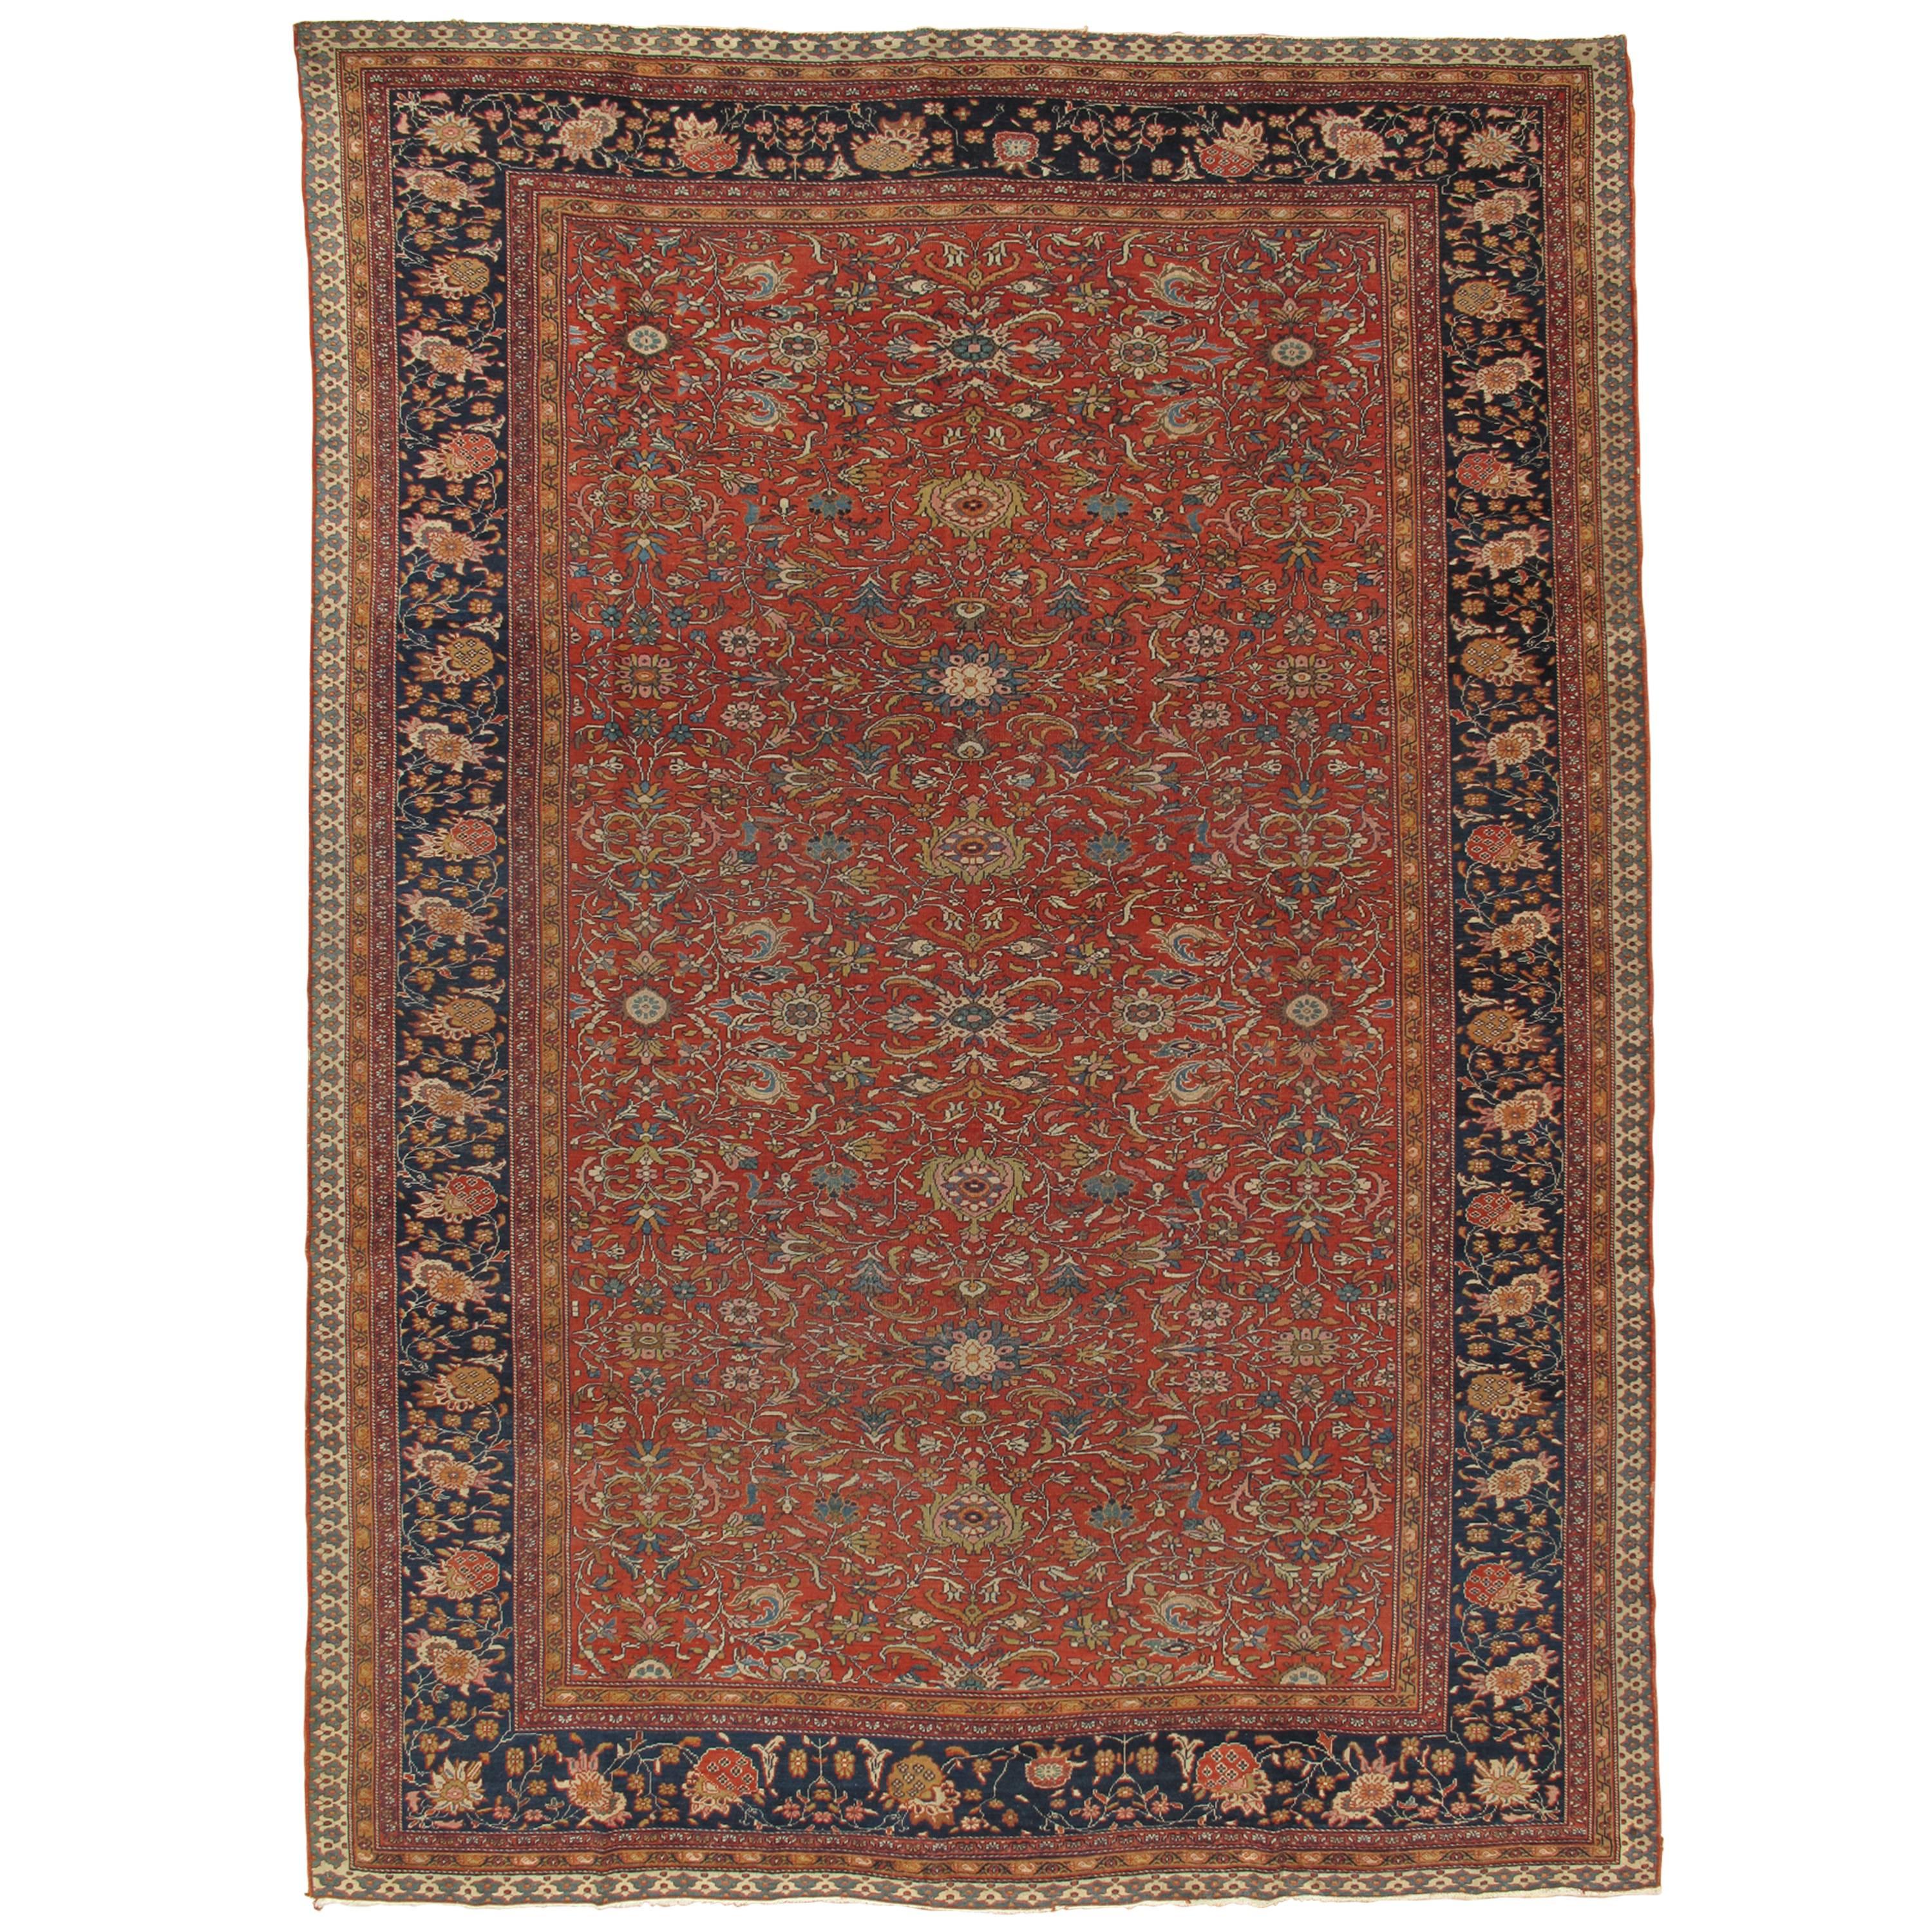 Antique Farahan Sarouk Carpet, Handmade Oriental Rug, Ivory, Red, Navy, Fine 